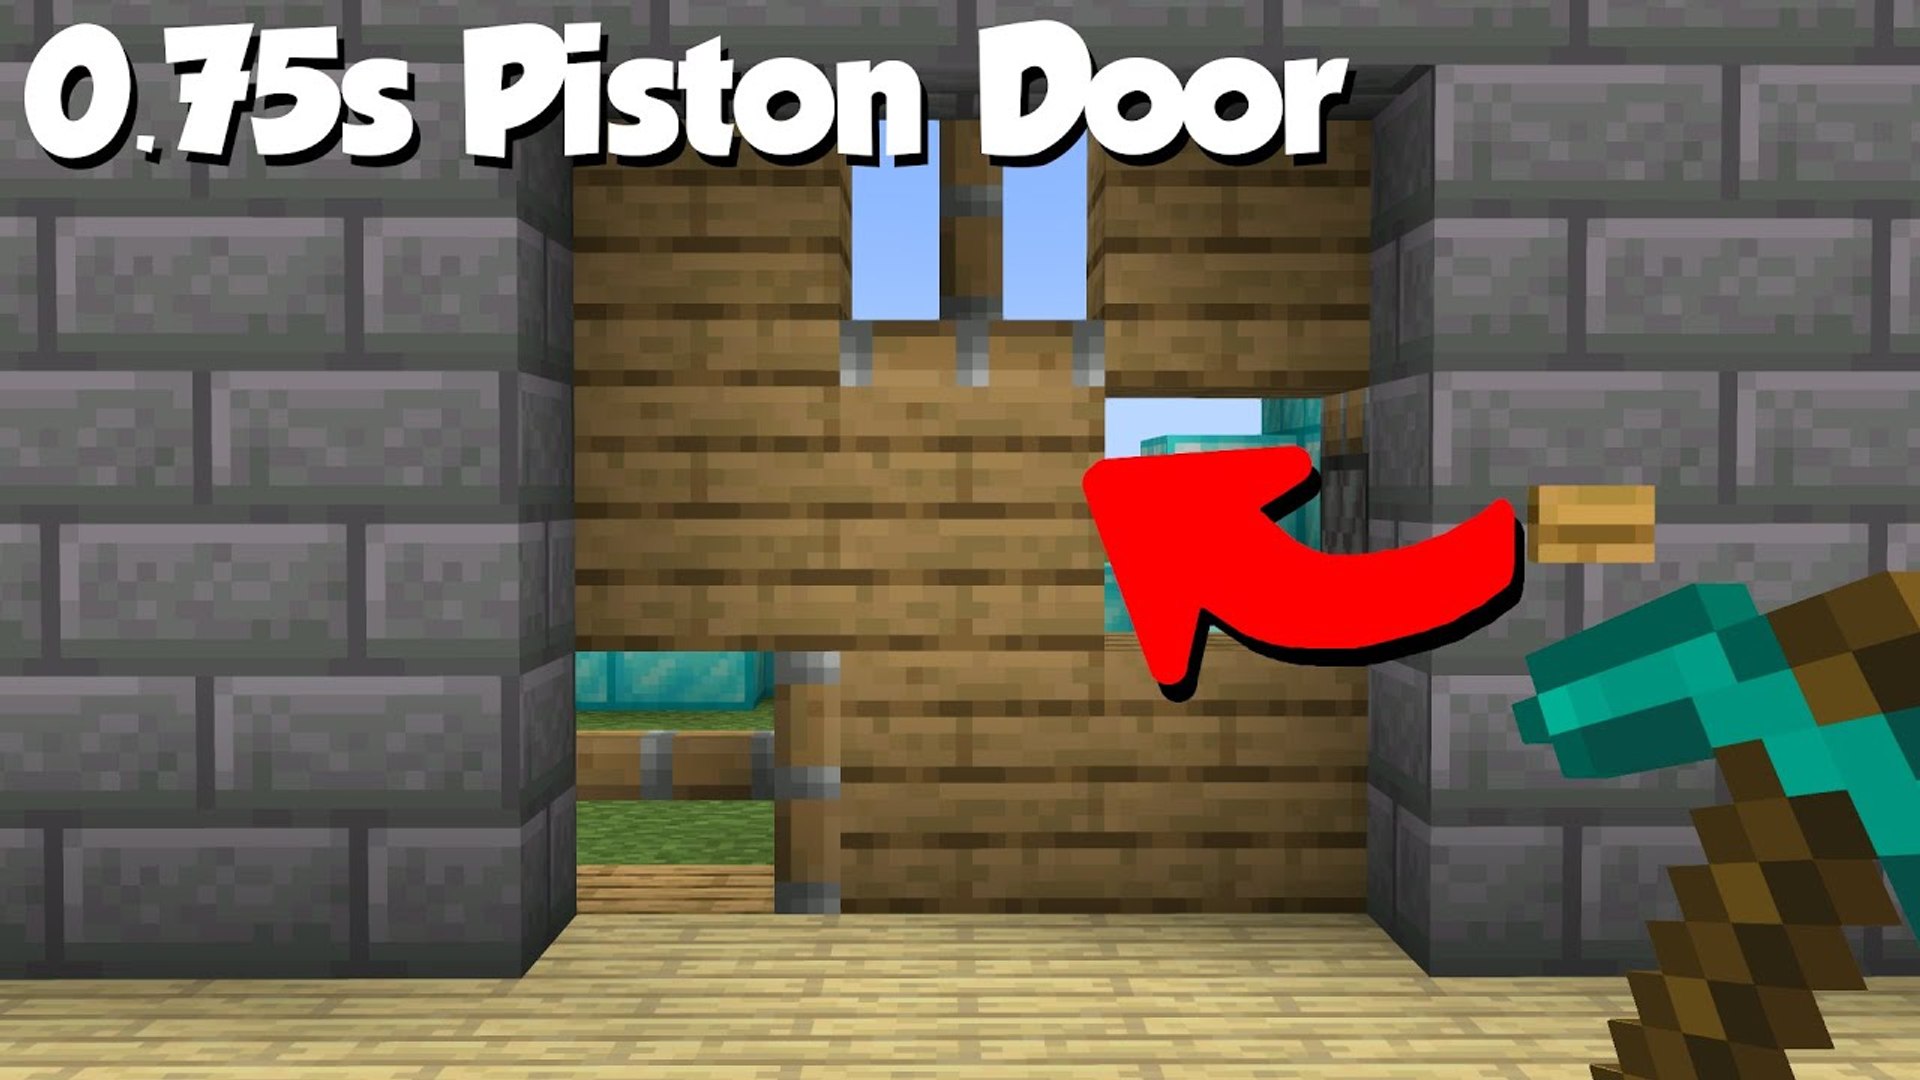 Minecraft- The Fastest 3x3 Piston Door. [0.75s] - video Dailymotion